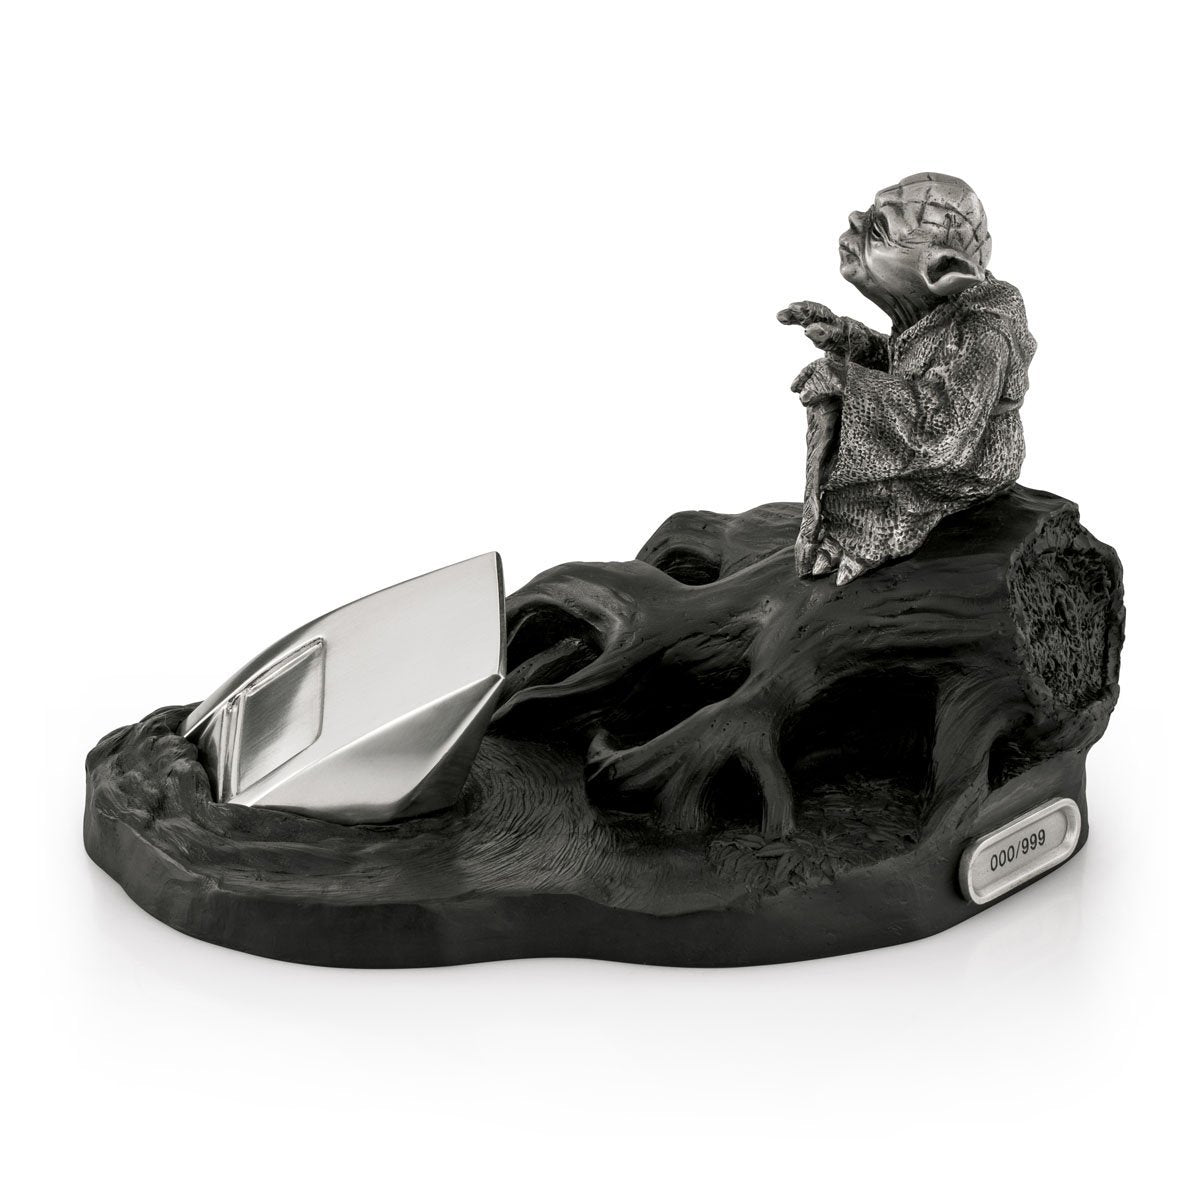 Star Wars Yoda Jedi Master Limited Edition Figurine - Statue Gift